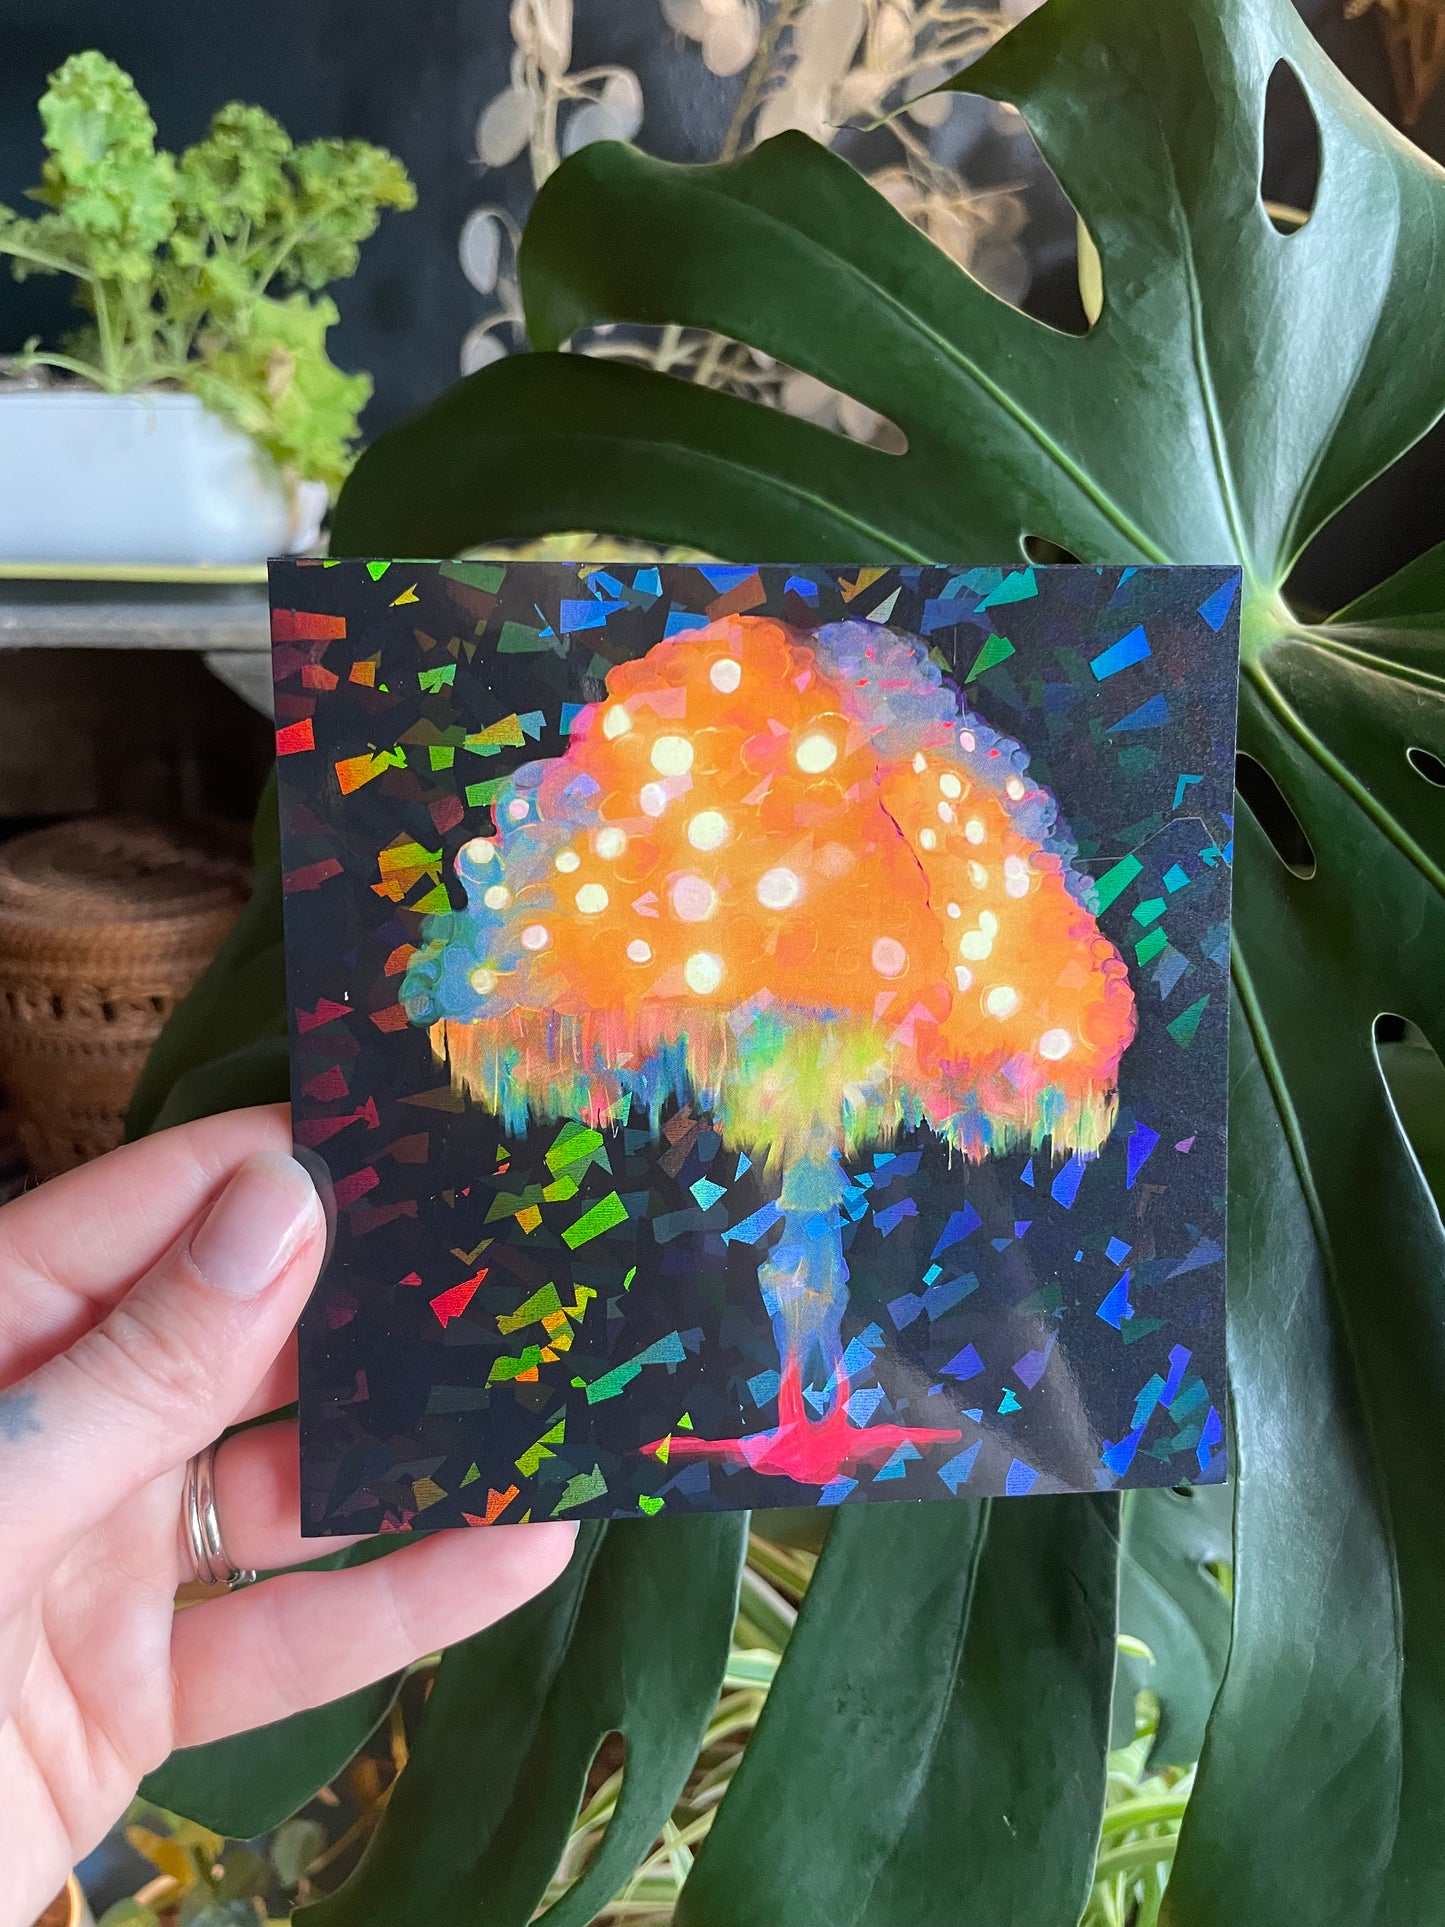 5x5 Holographic Ghost Fungi Mushroom Prints